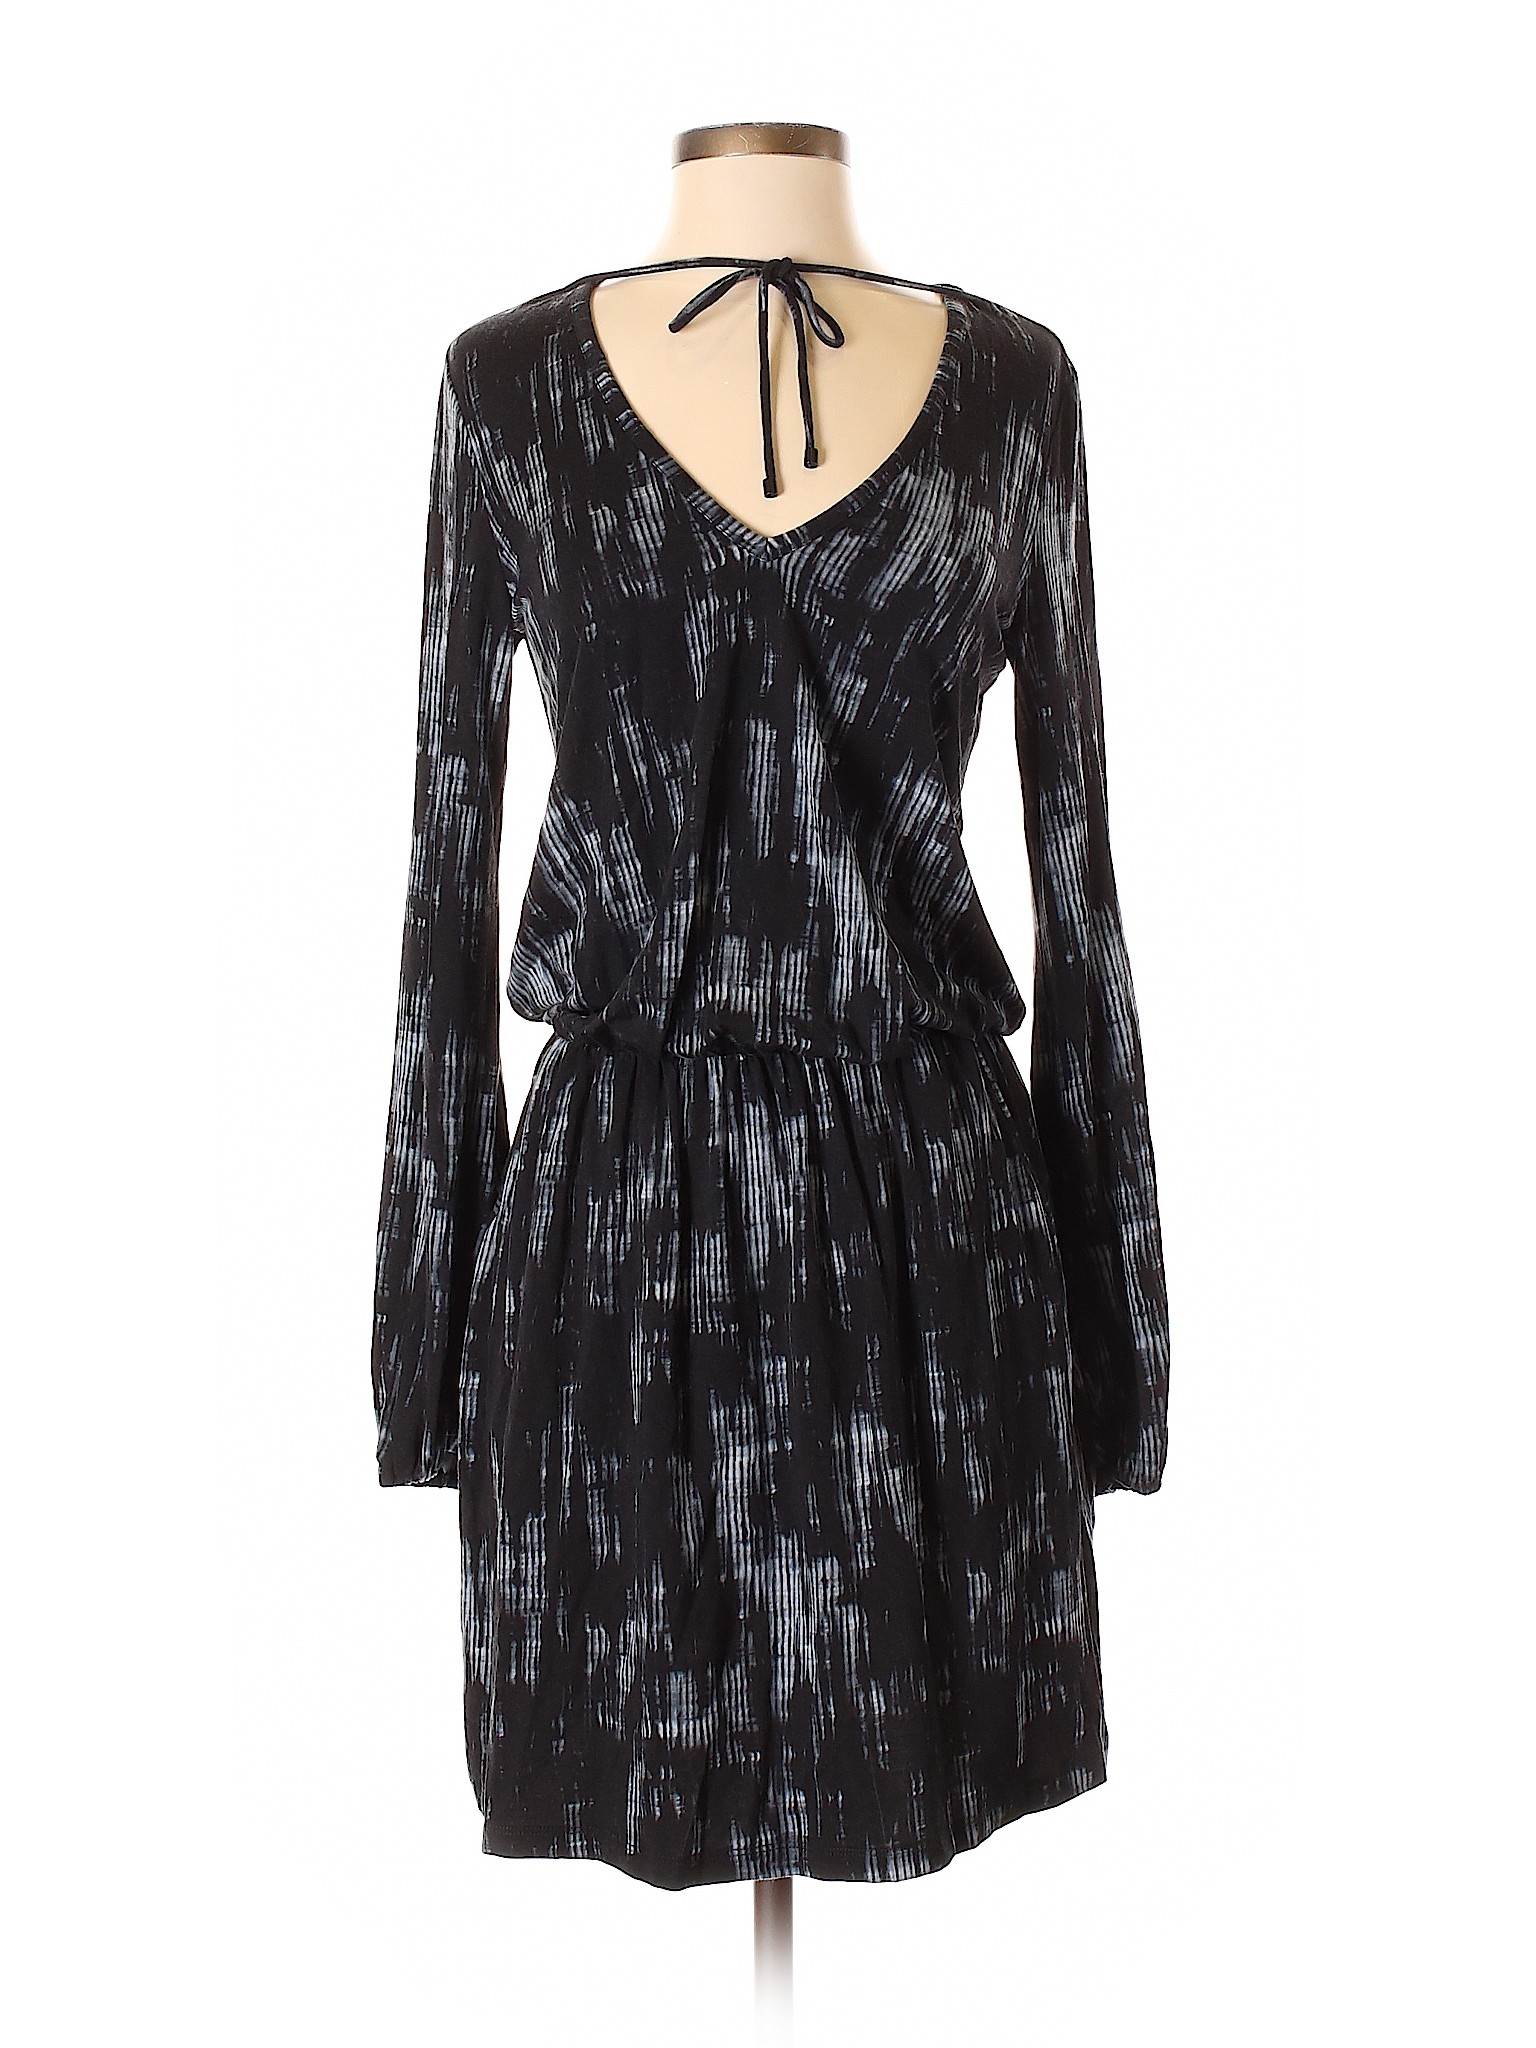 Tart Women Black Casual Dress S | eBay